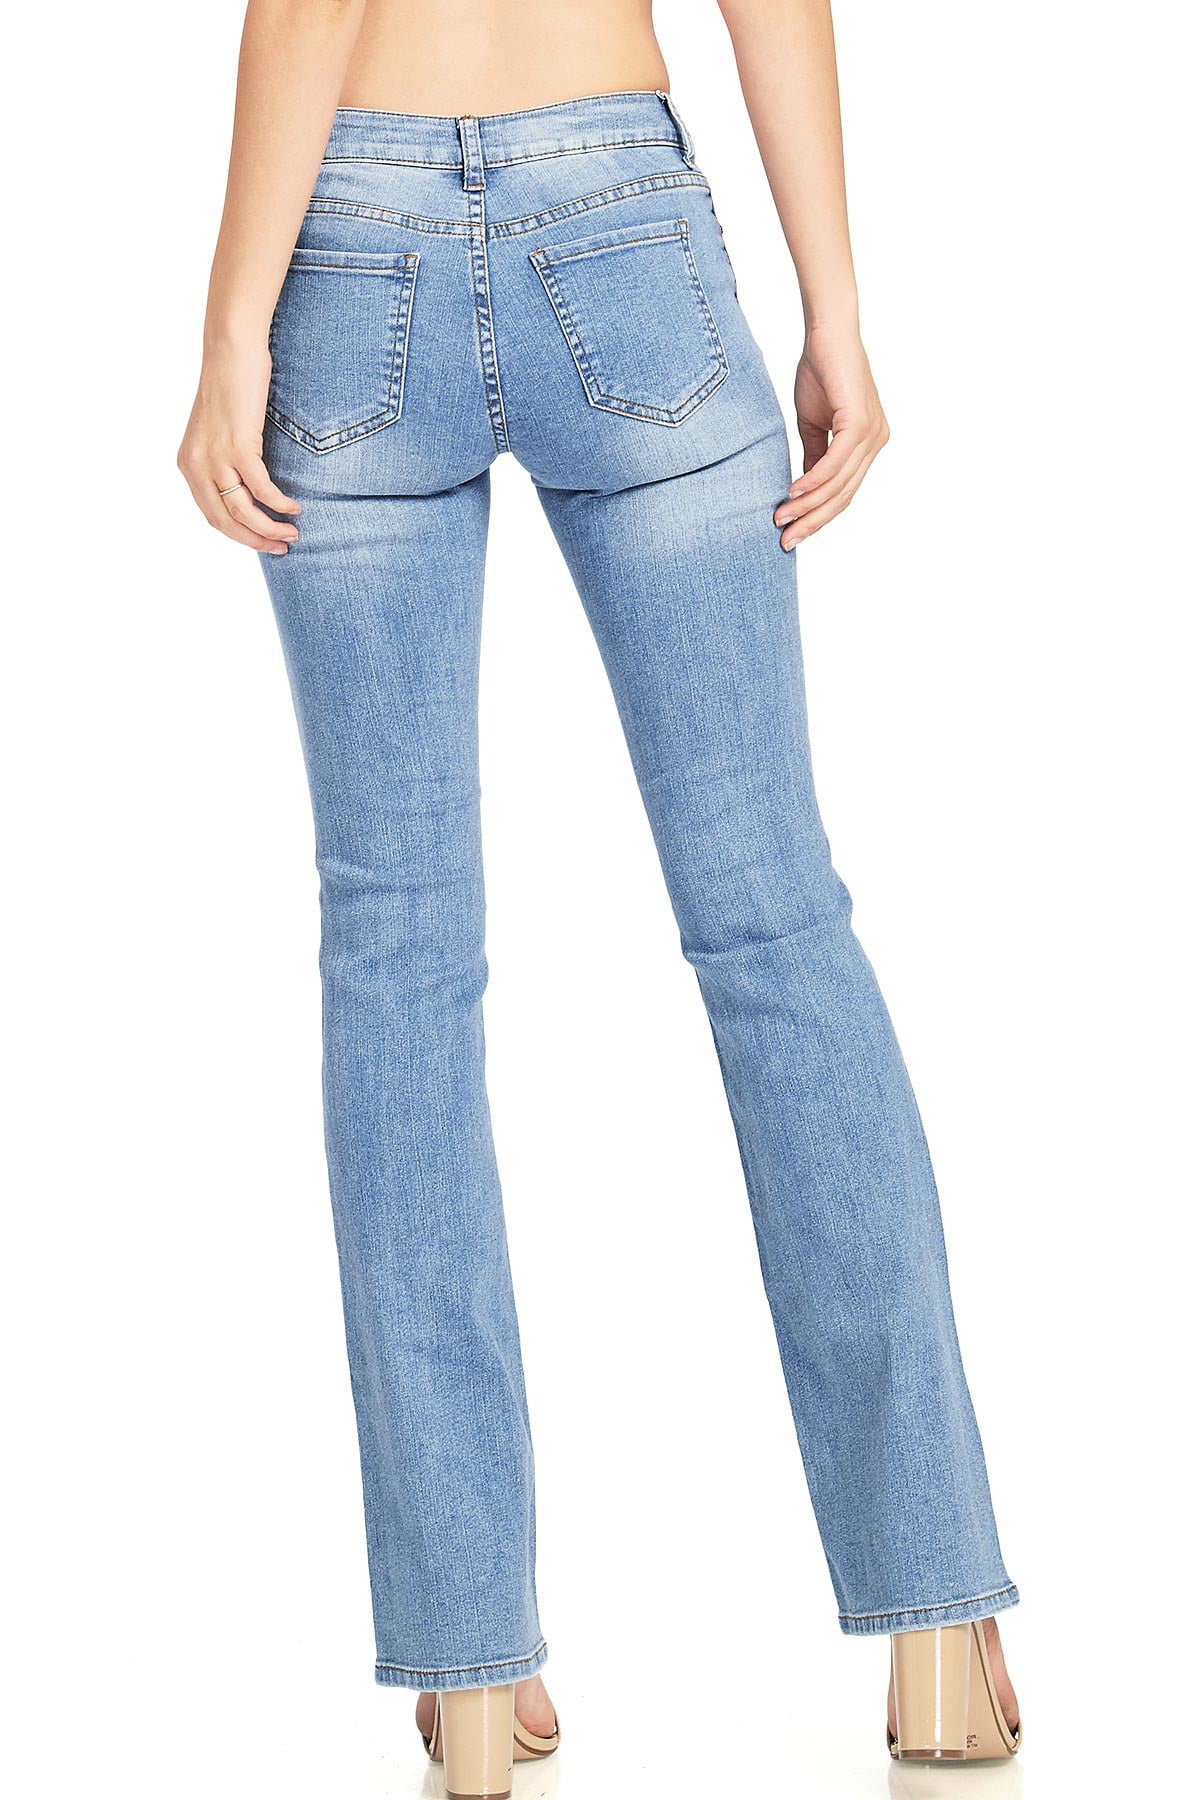 Wax Jeans-womens 7